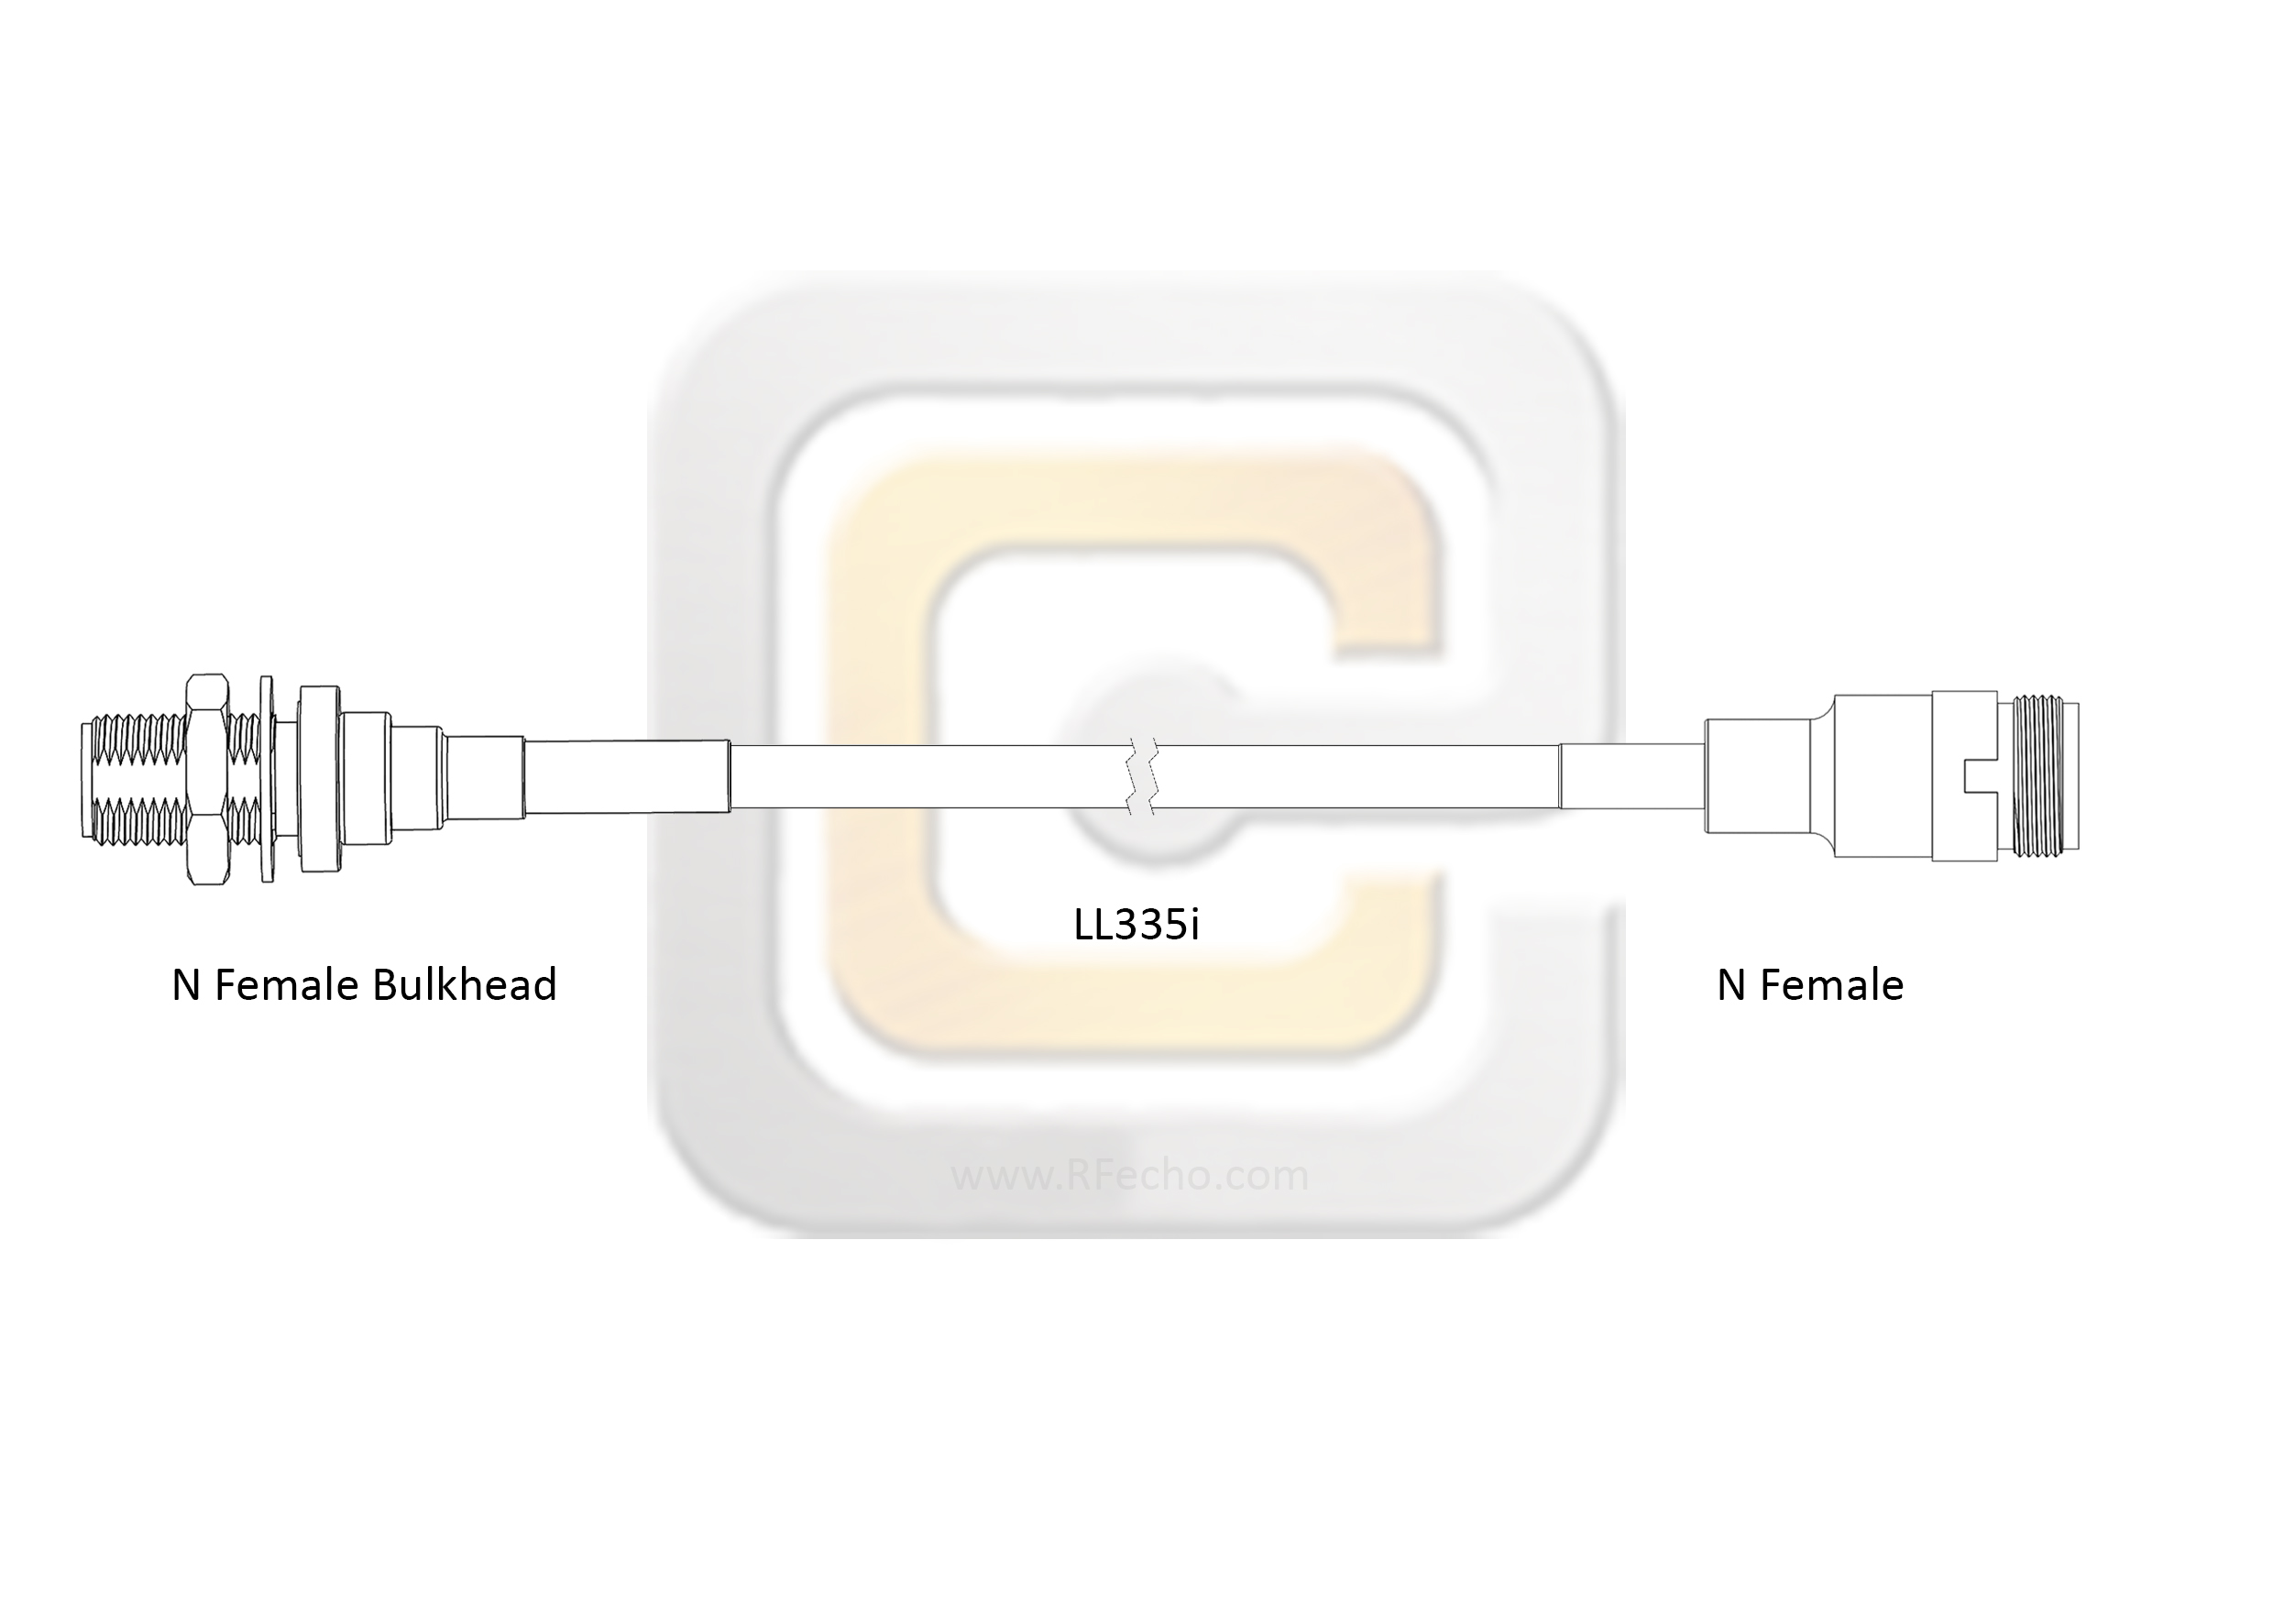 Low Loss N Female Bulkhead to N Female, 18 GHz, Composite LL335i Coax and RoHS